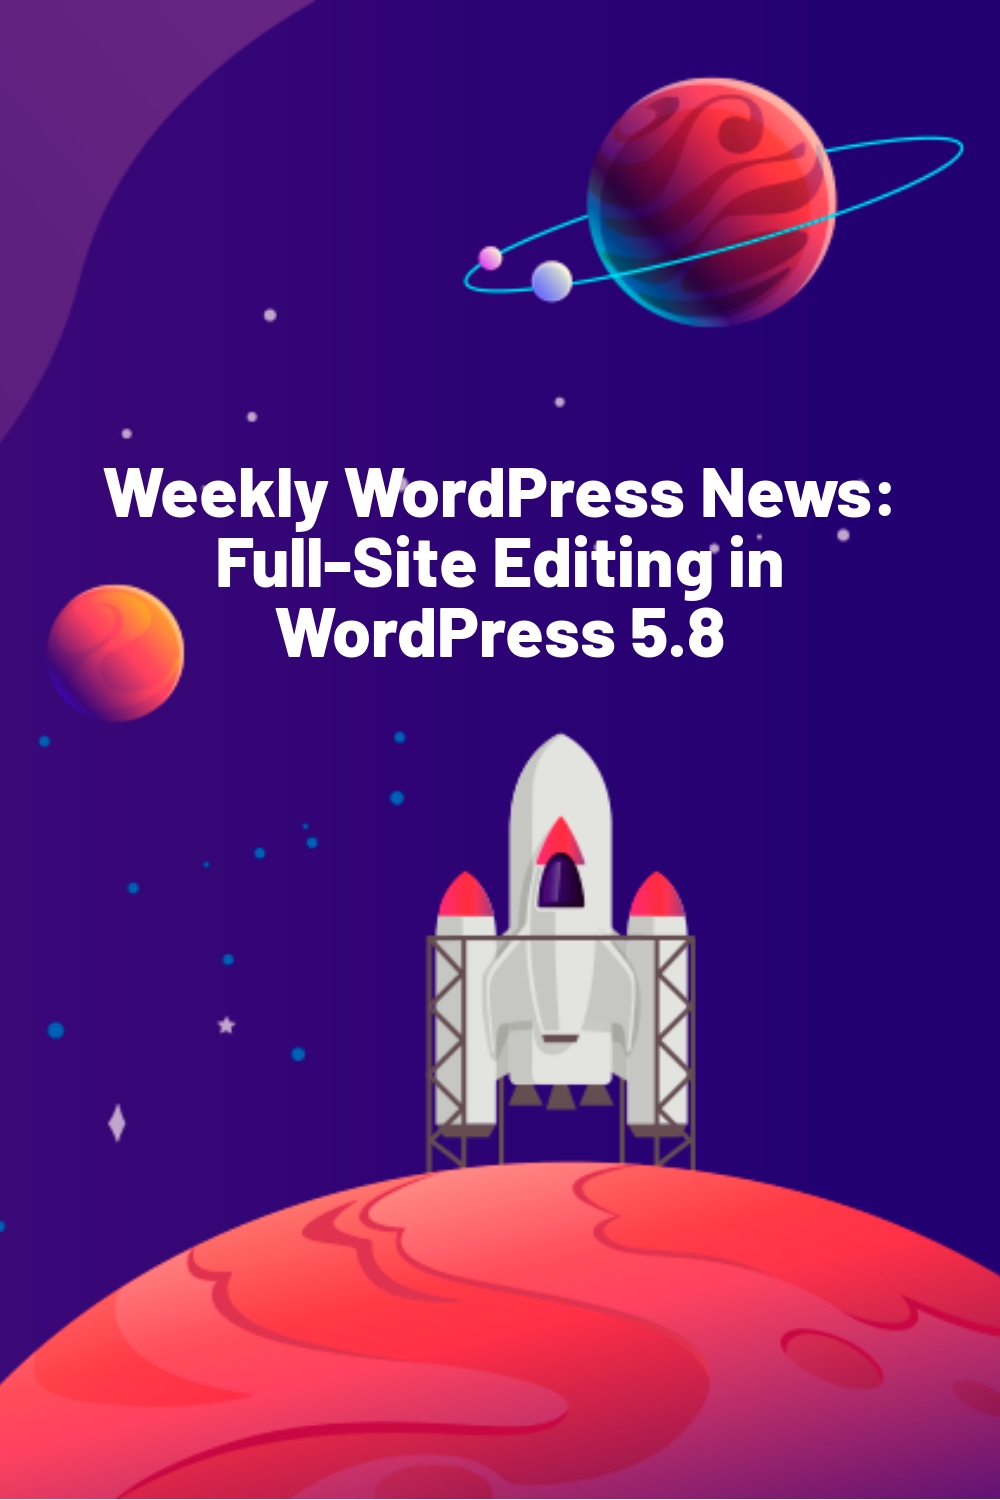 Weekly WordPress News: Full-Site Editing in WordPress 5.8